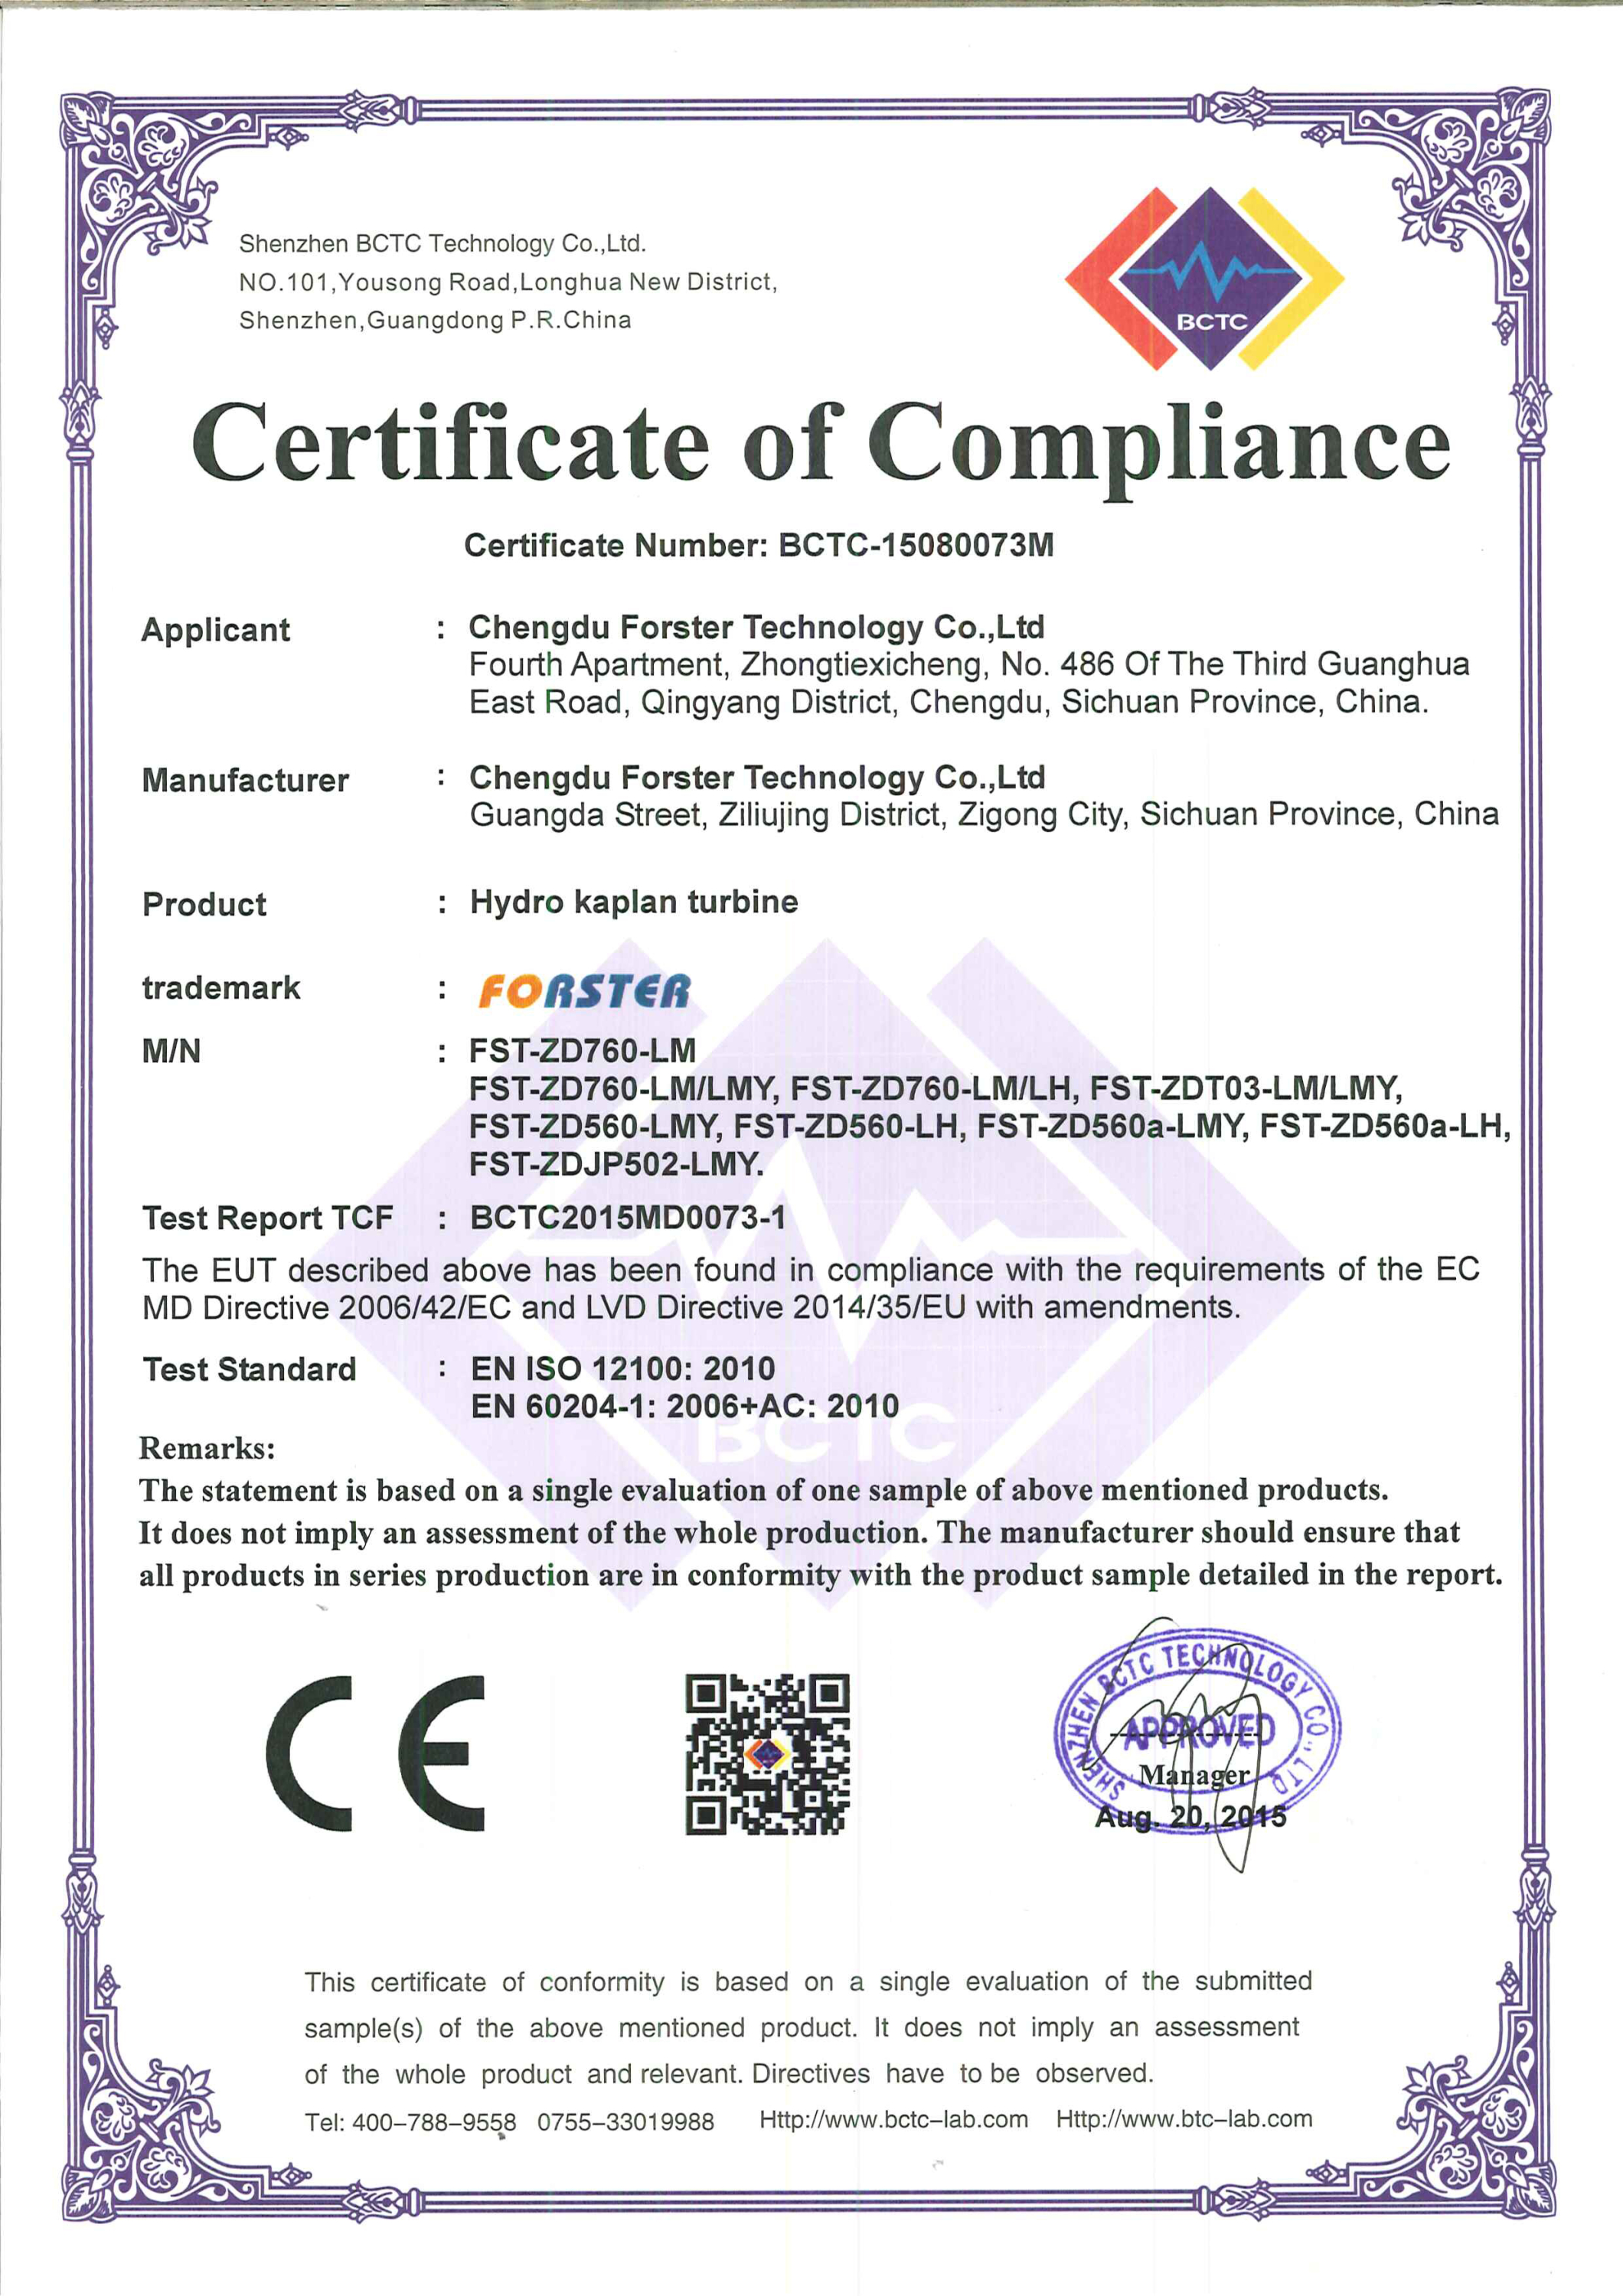 kaplan CE certificate